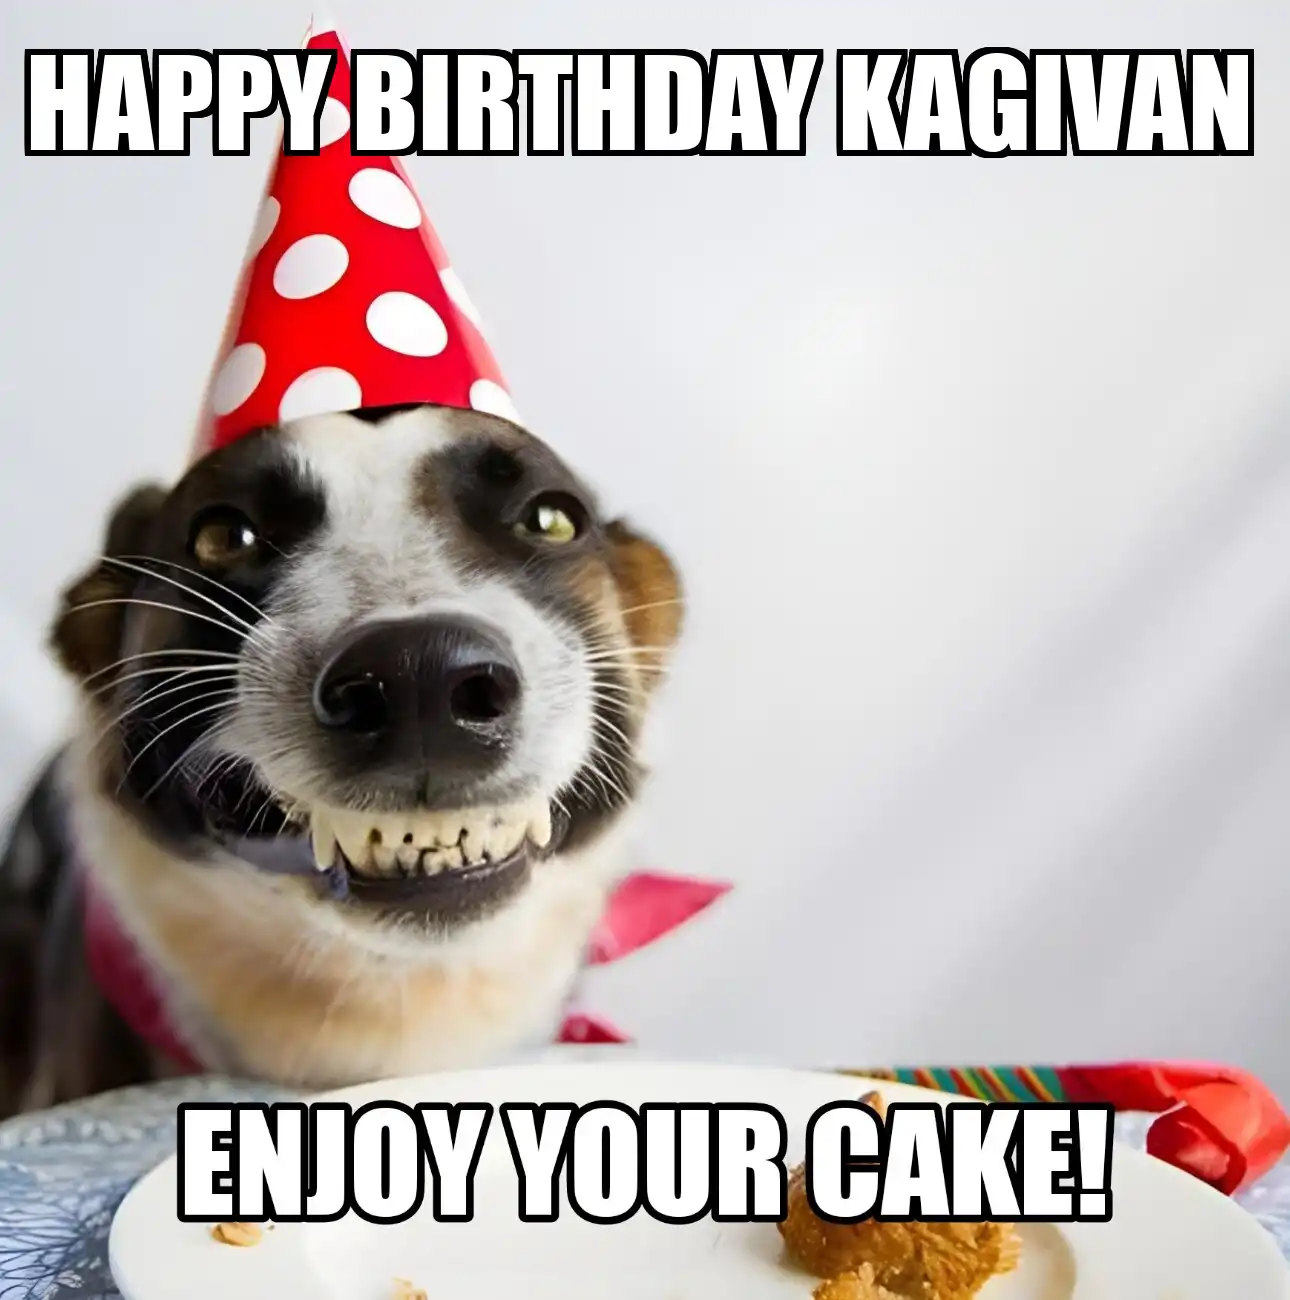 Happy Birthday Kagivan Enjoy Your Cake Dog Meme